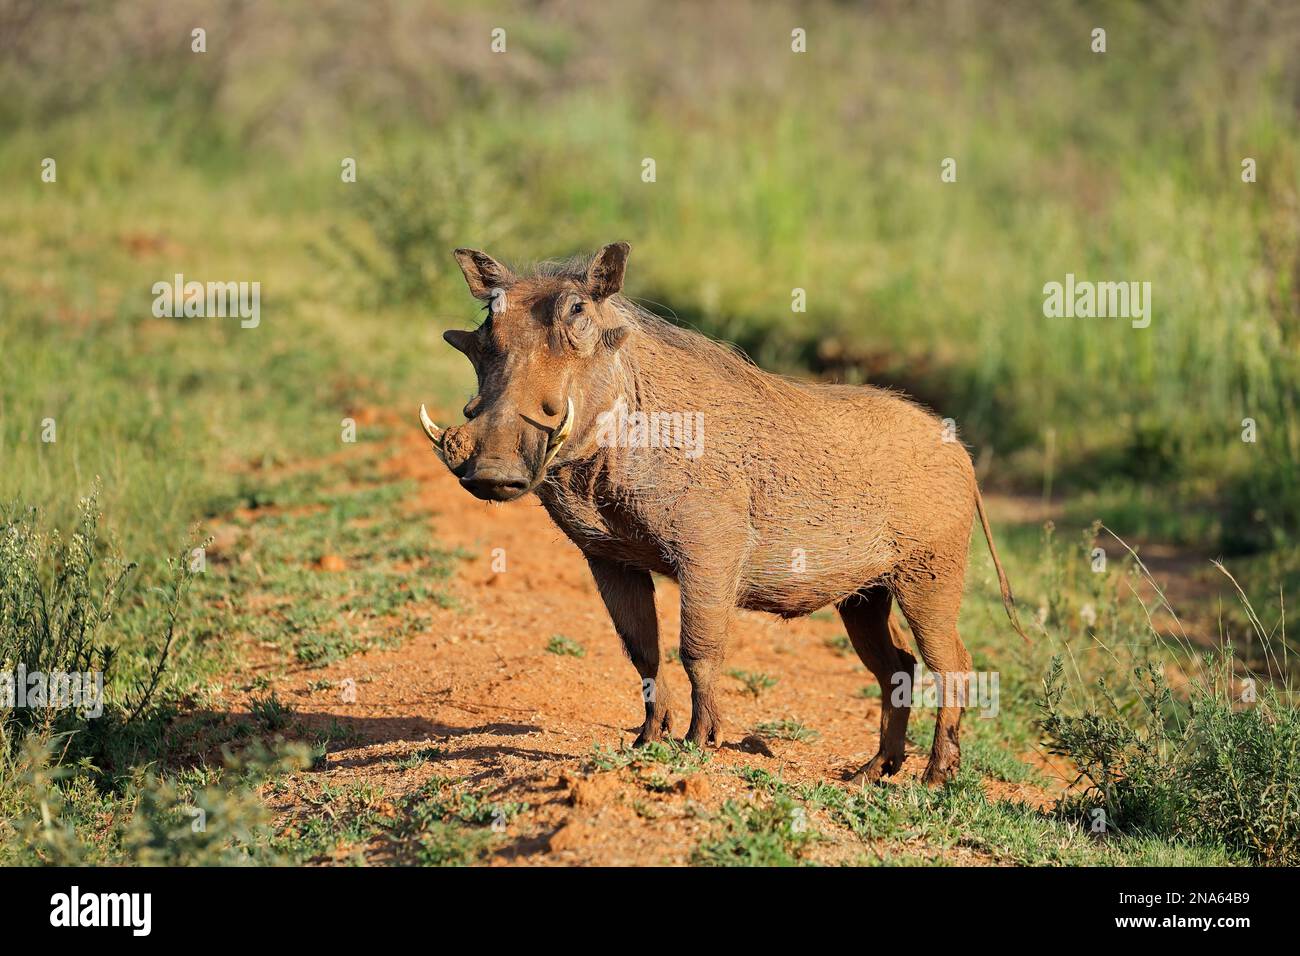 A warthog (Phacochoerus africanus) in natural habitat, Mokala National Park, South Africa Stock Photo